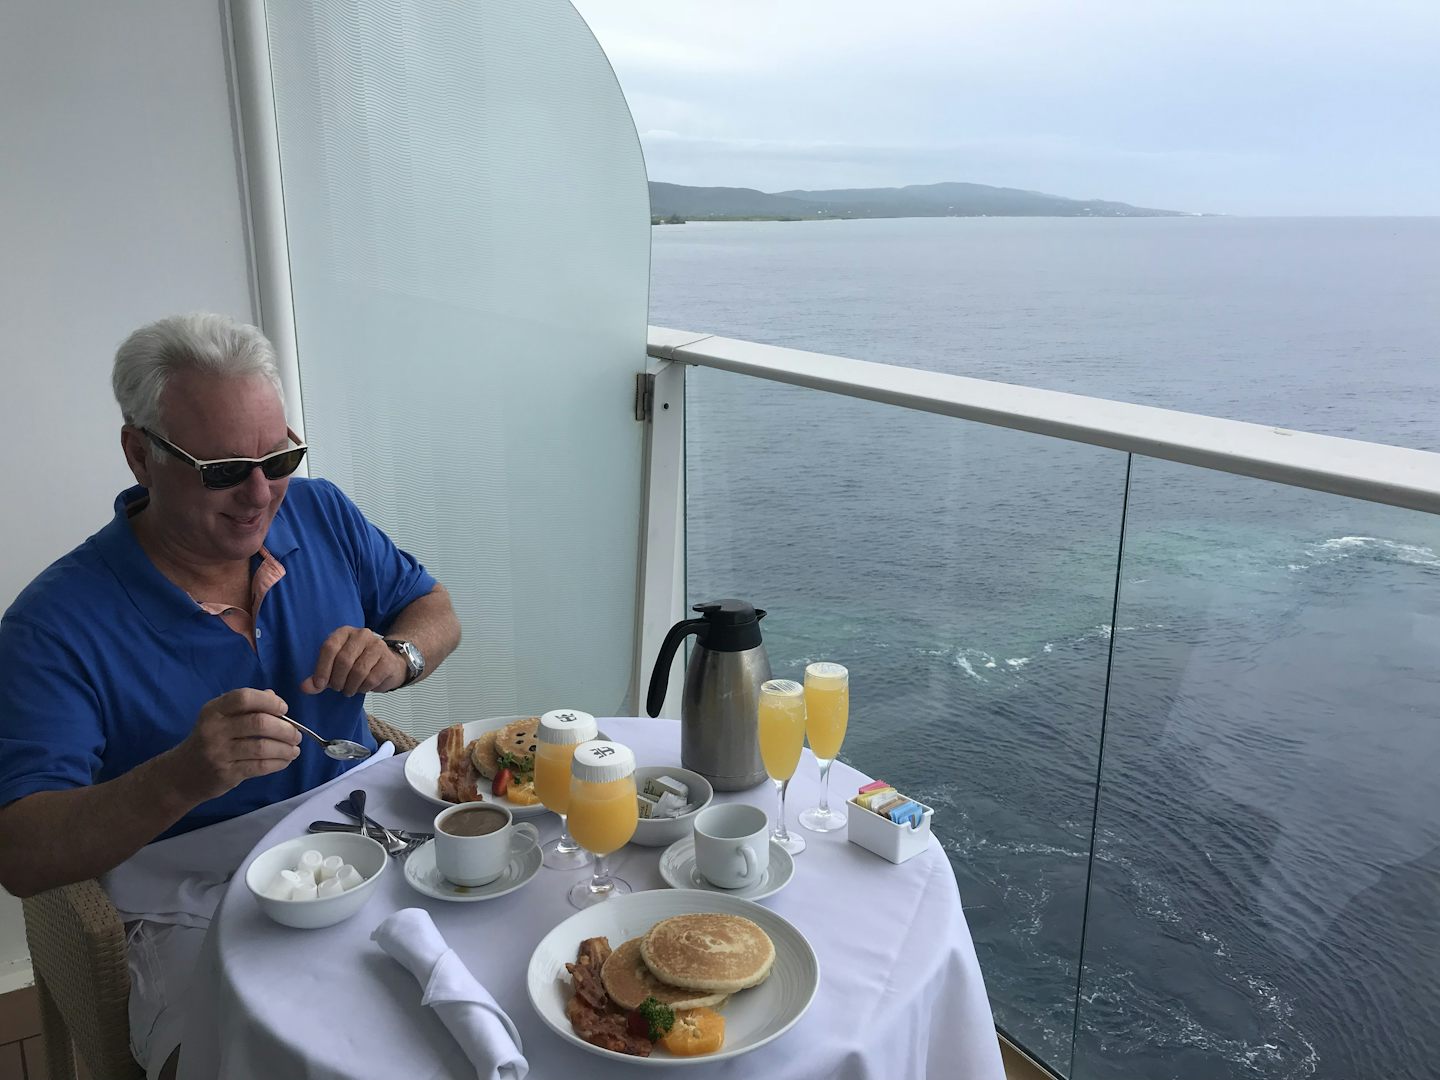 Breakfast on the balcony in Jamaica